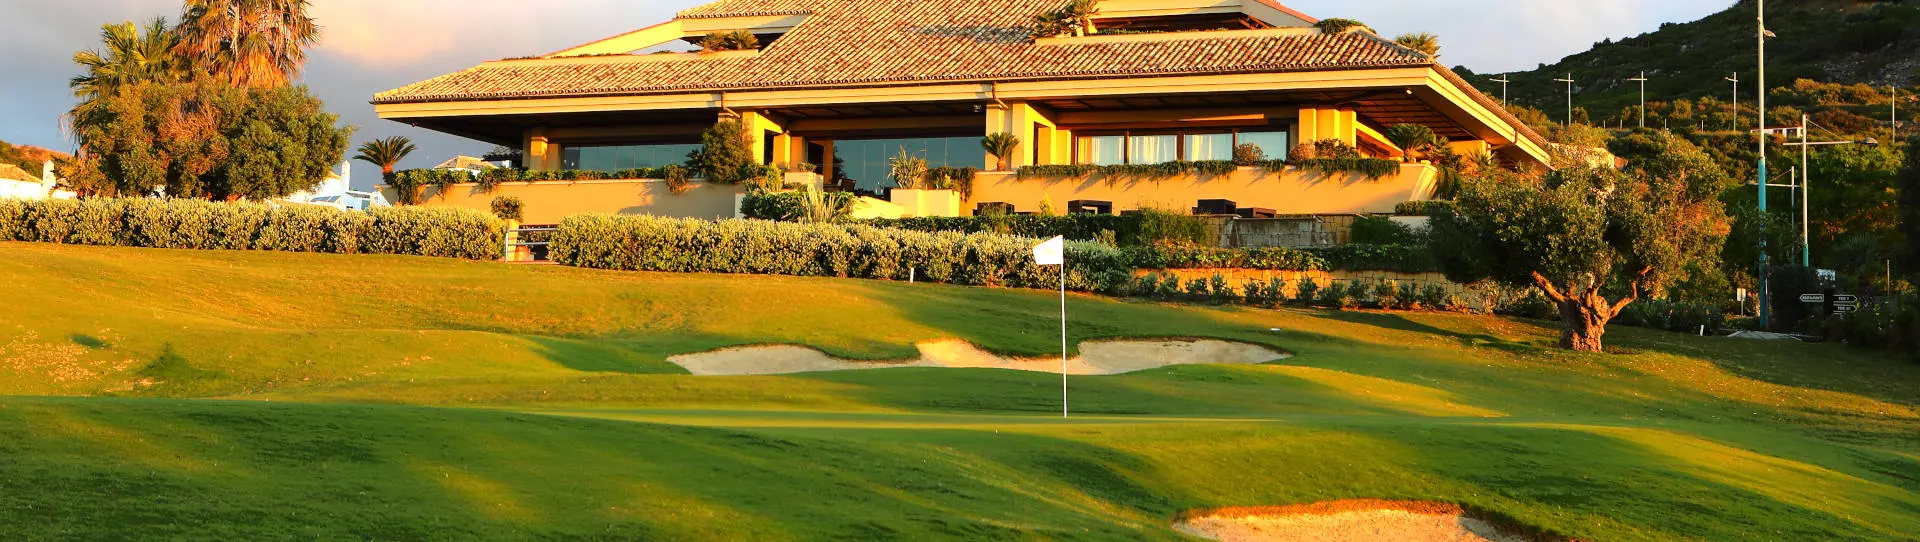 Spain golf courses - Valle Romano Golf - Photo 2